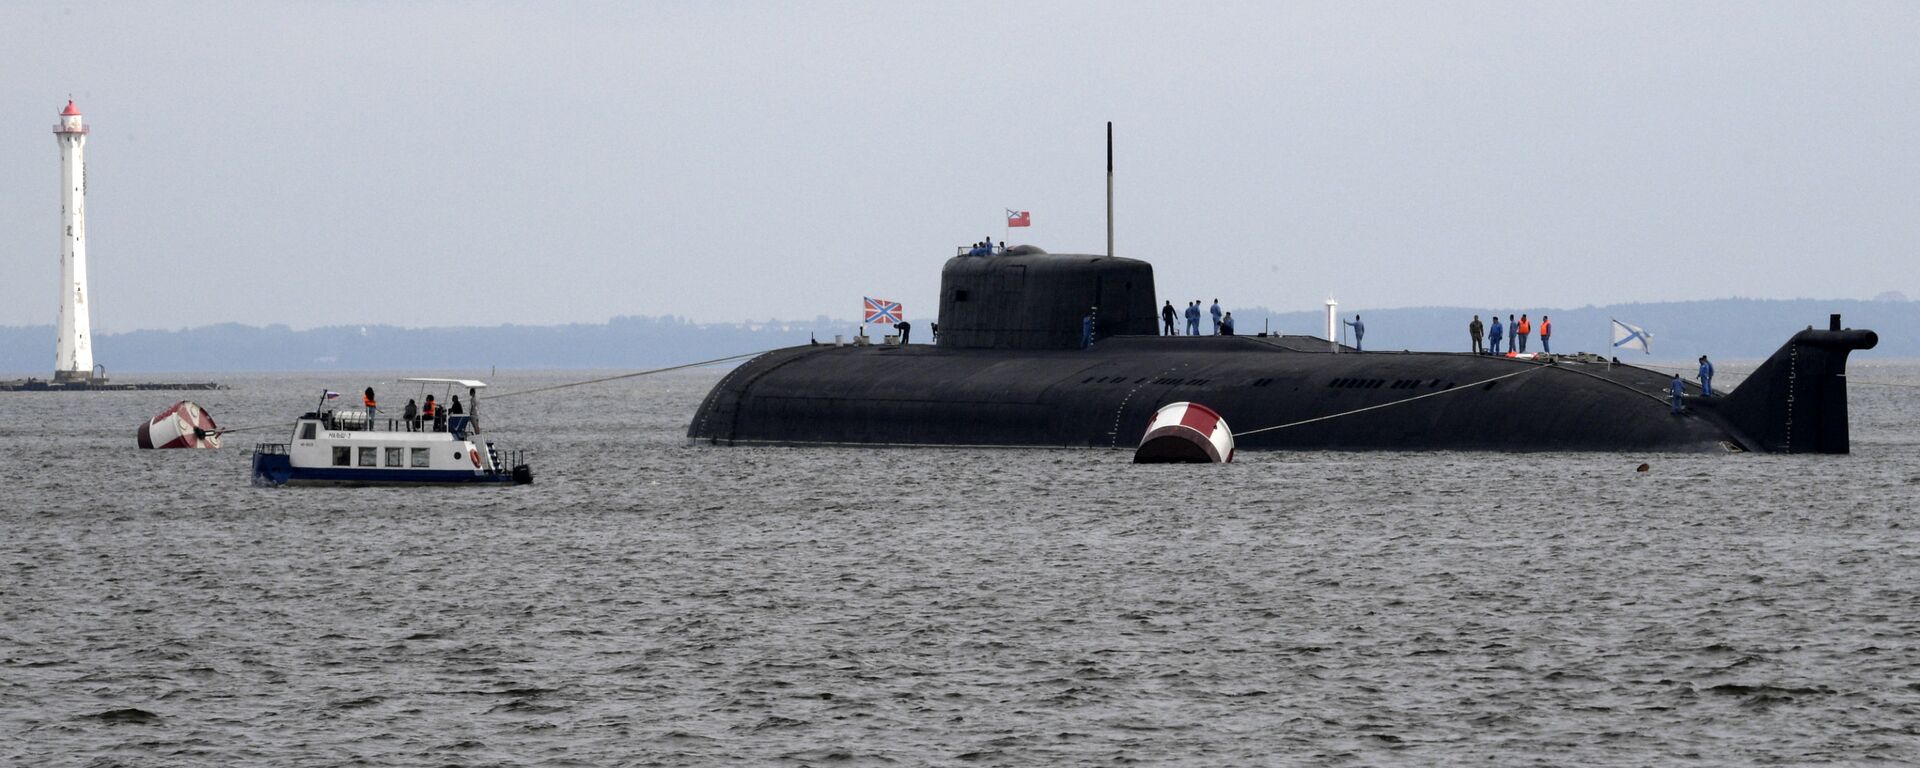 El submarino nuclear ruso Oriol - Sputnik Mundo, 1920, 19.01.2021